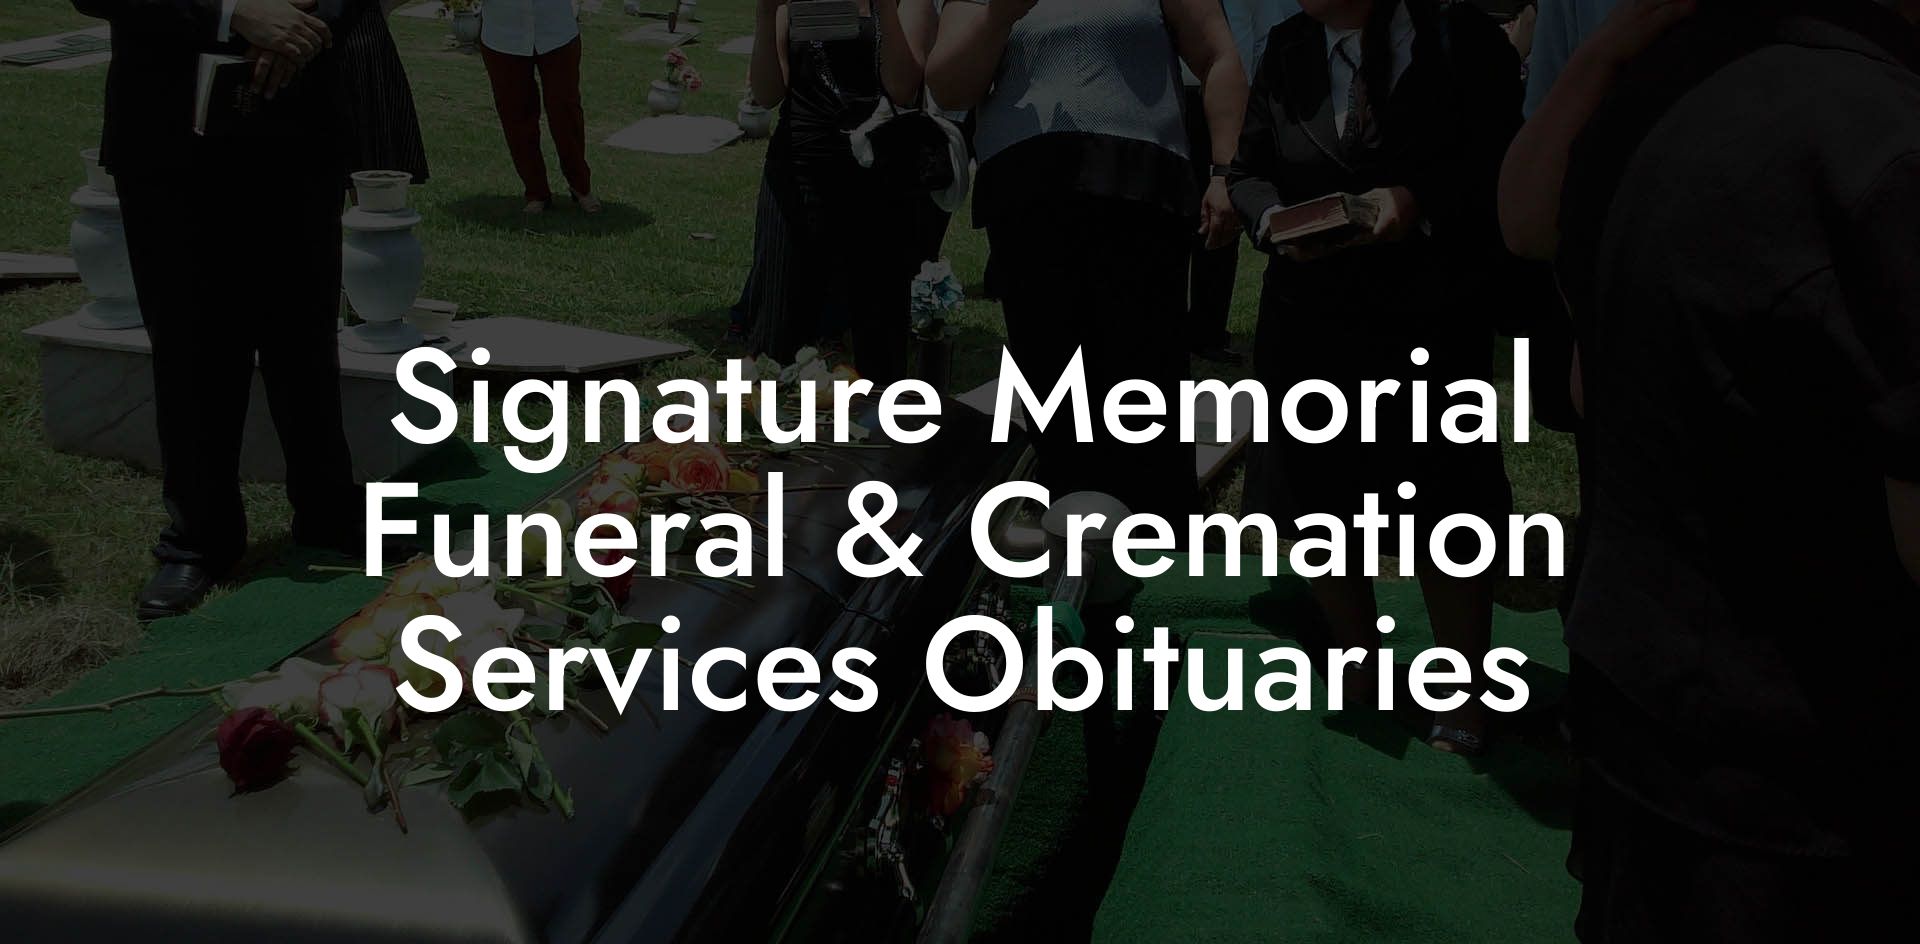 Signature Memorial Funeral & Cremation Services Obituaries